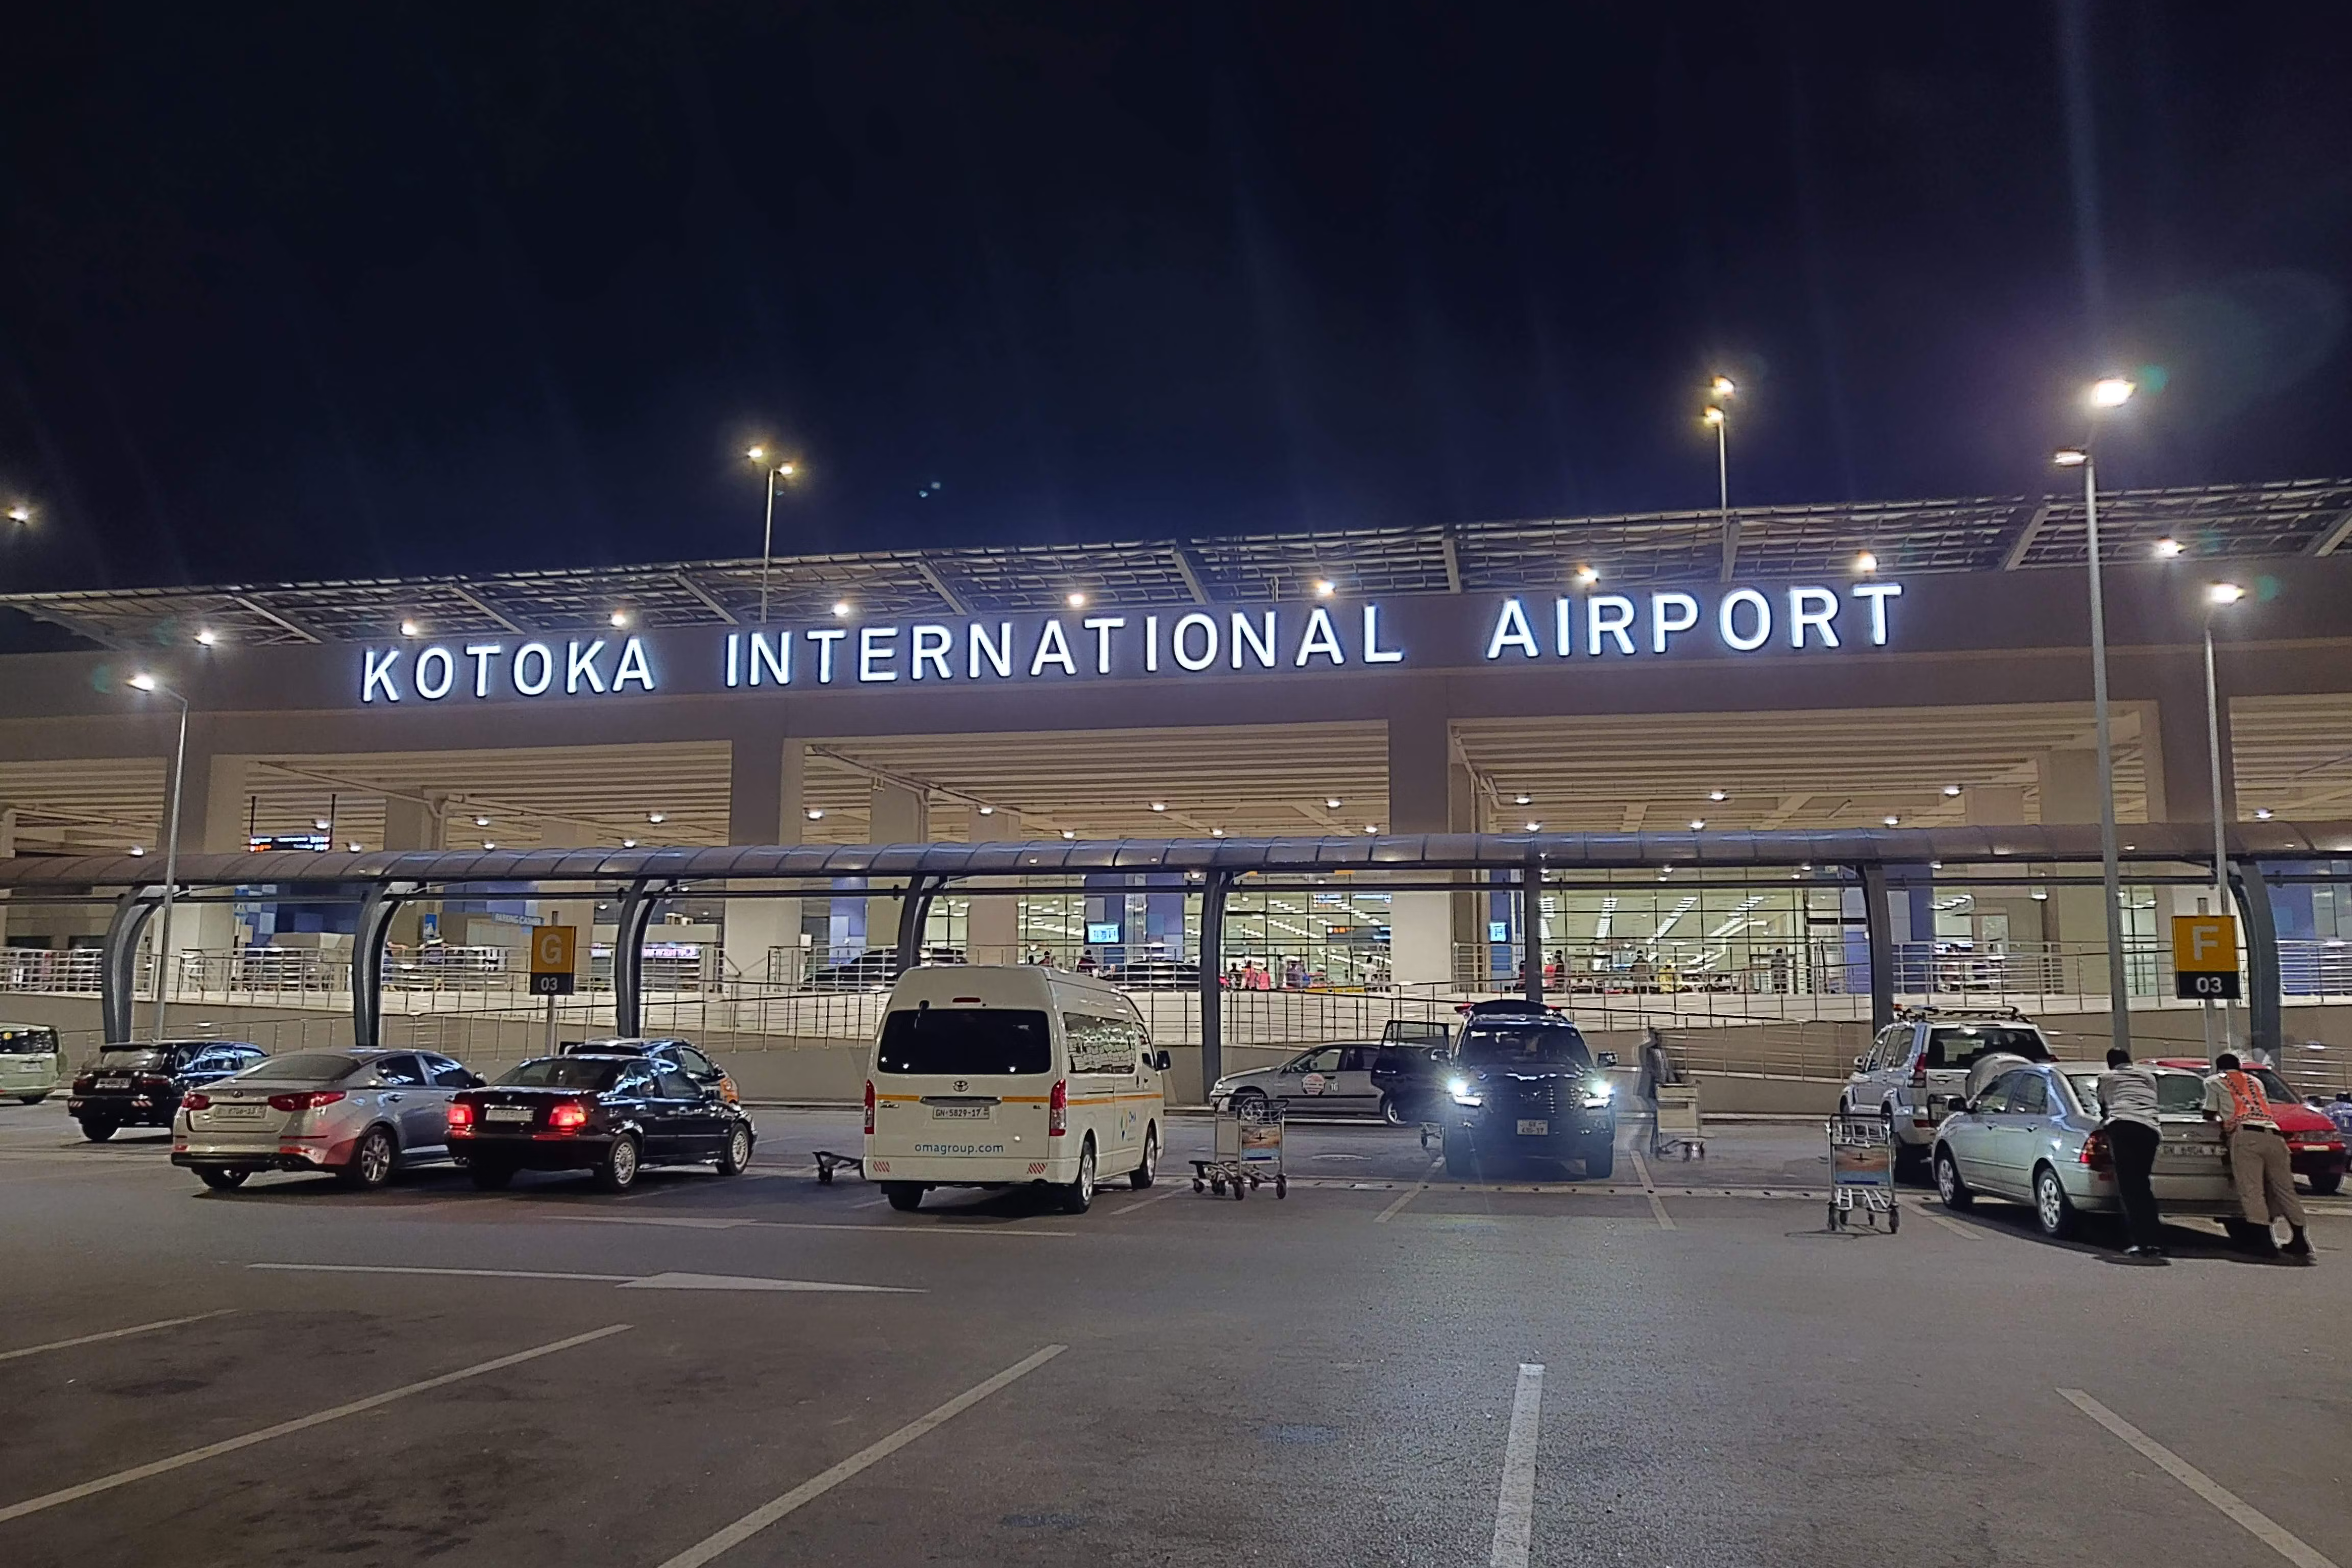 Kokota International Airport